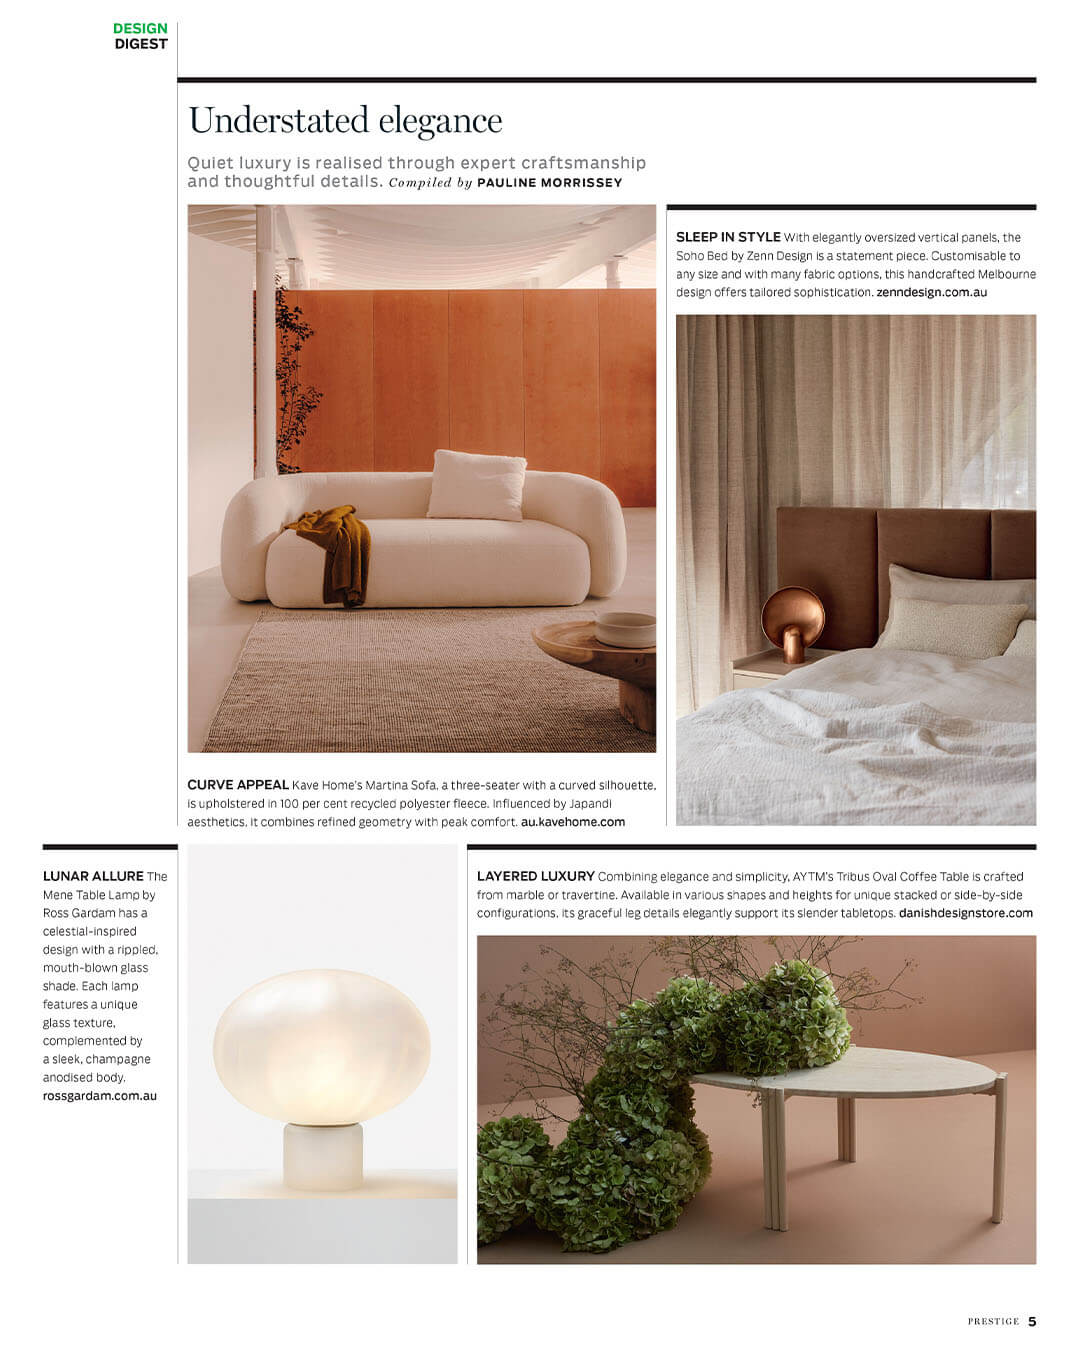 Soho Bed Featured in Design Digest, Prestige Magazine.